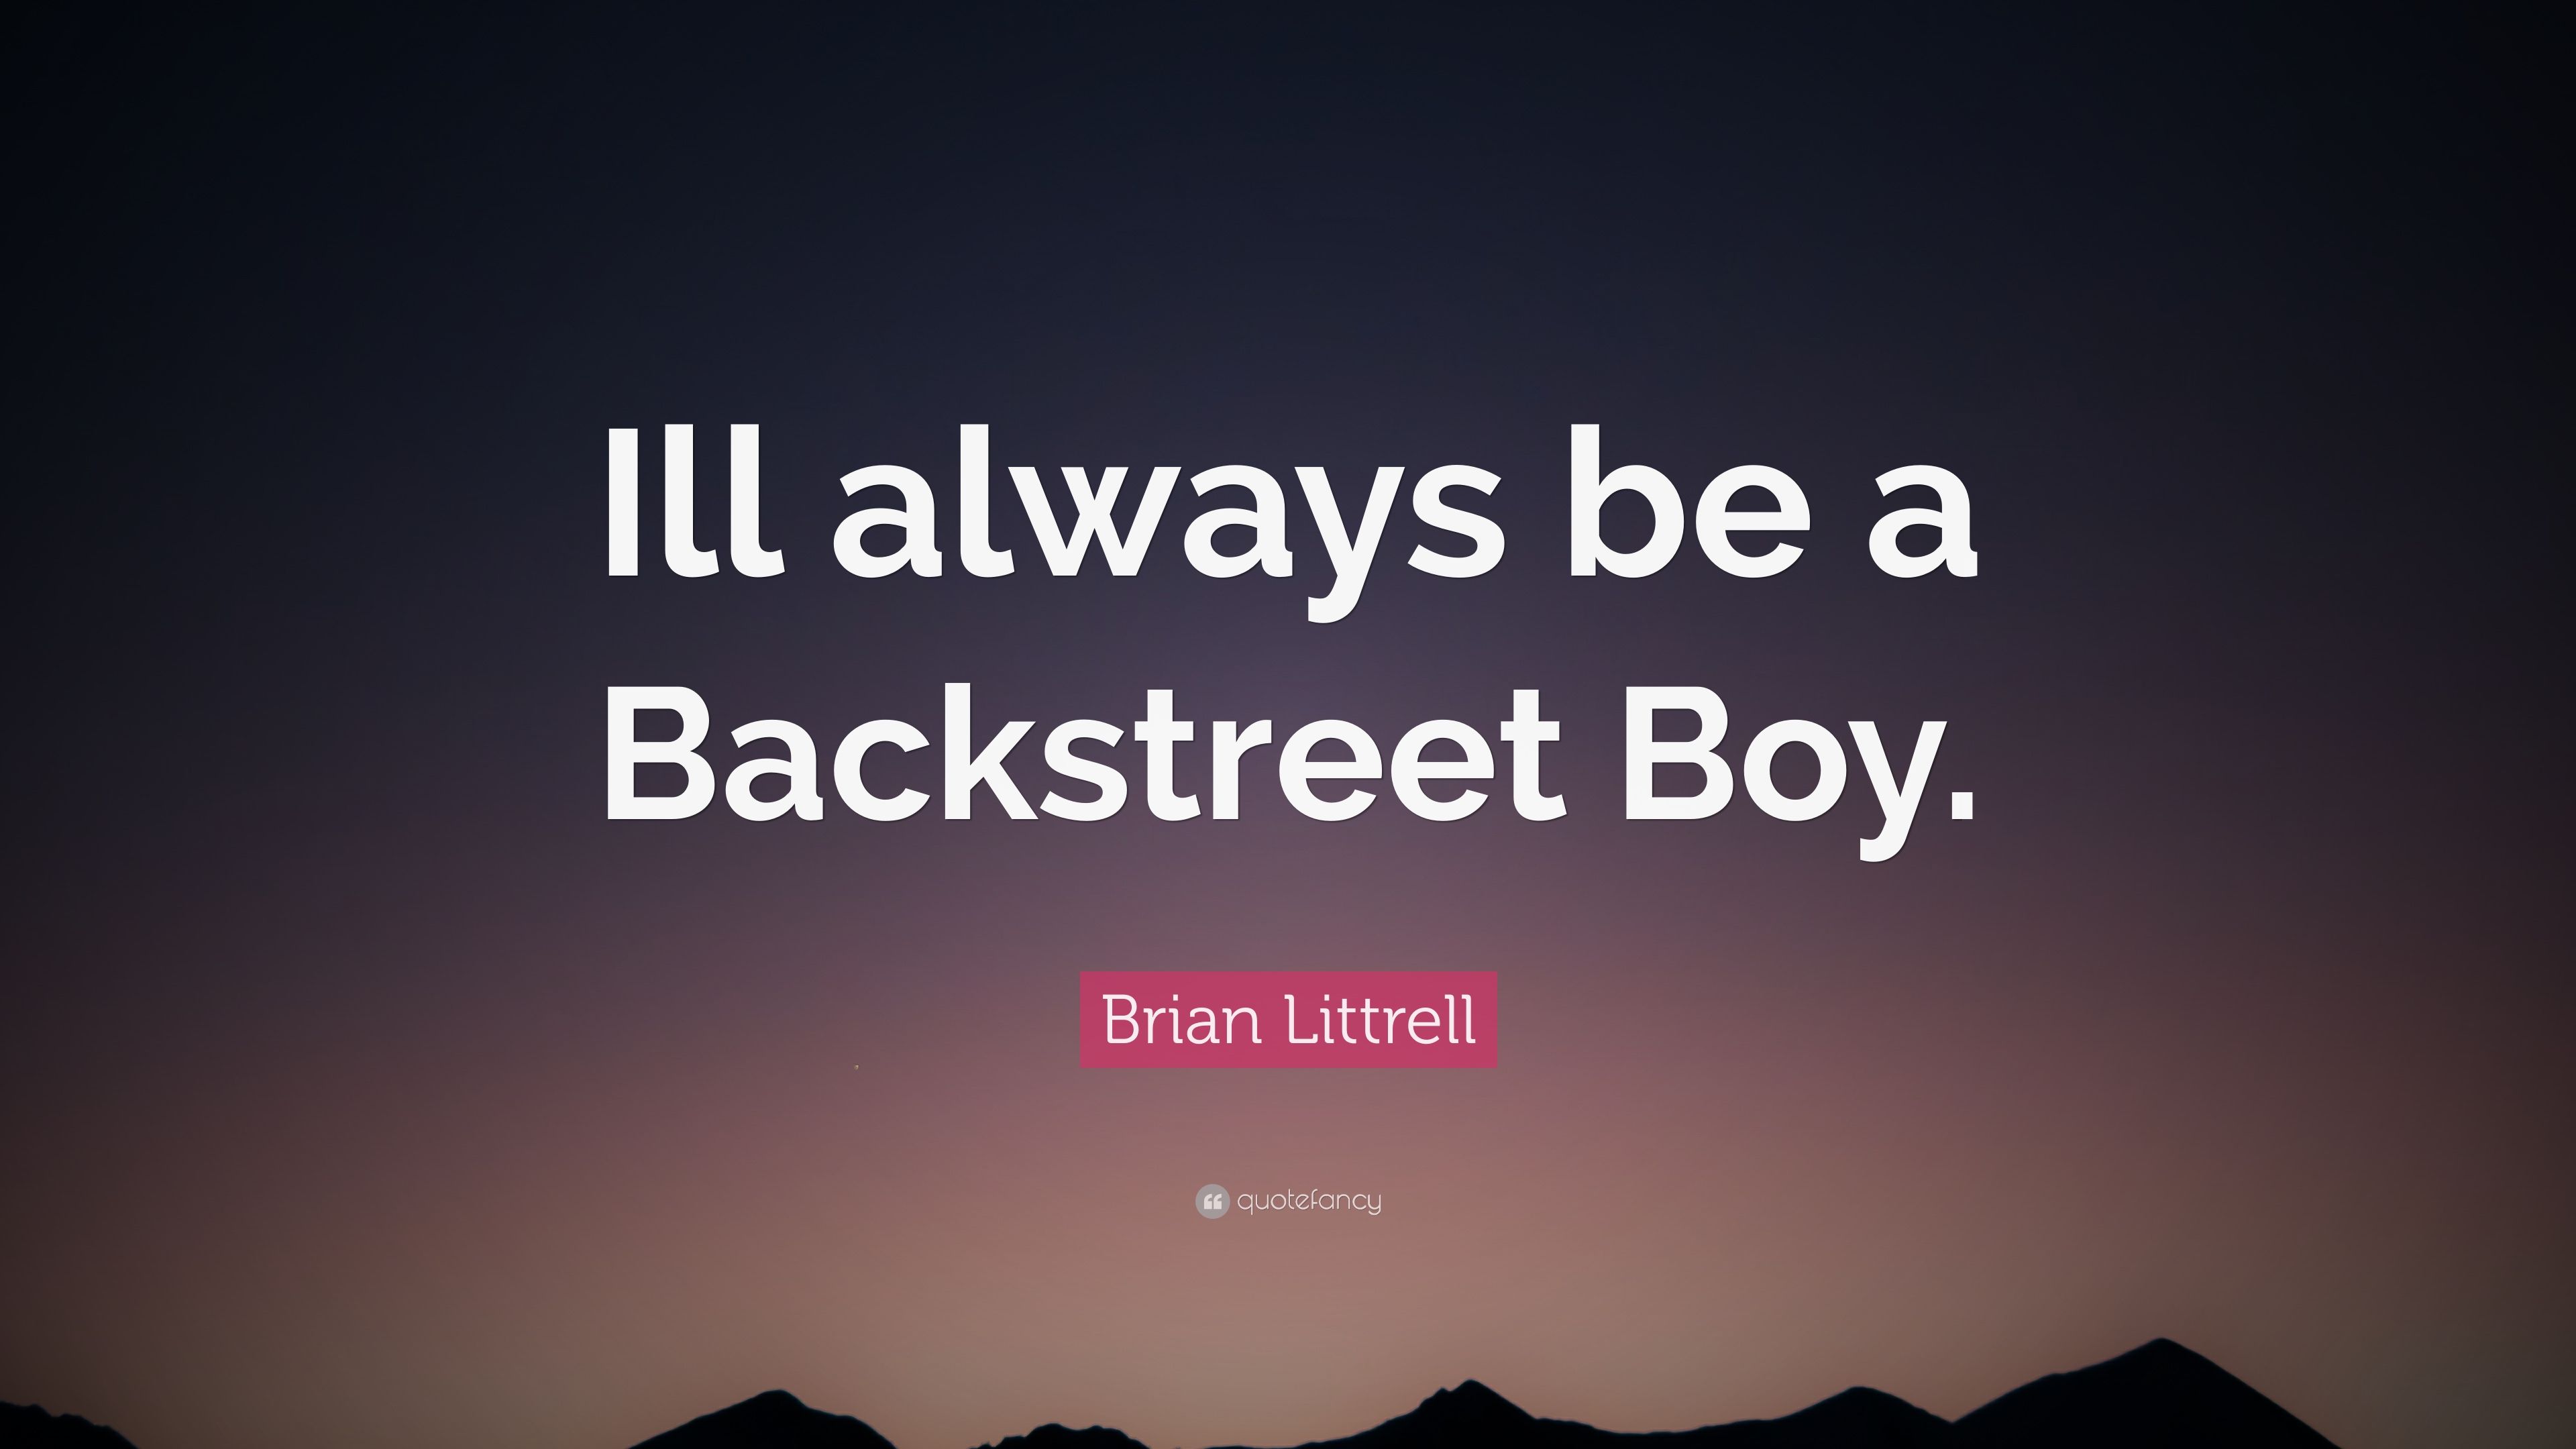 Brian Littrell Quote: “Ill always be a Backstreet Boy.” 7